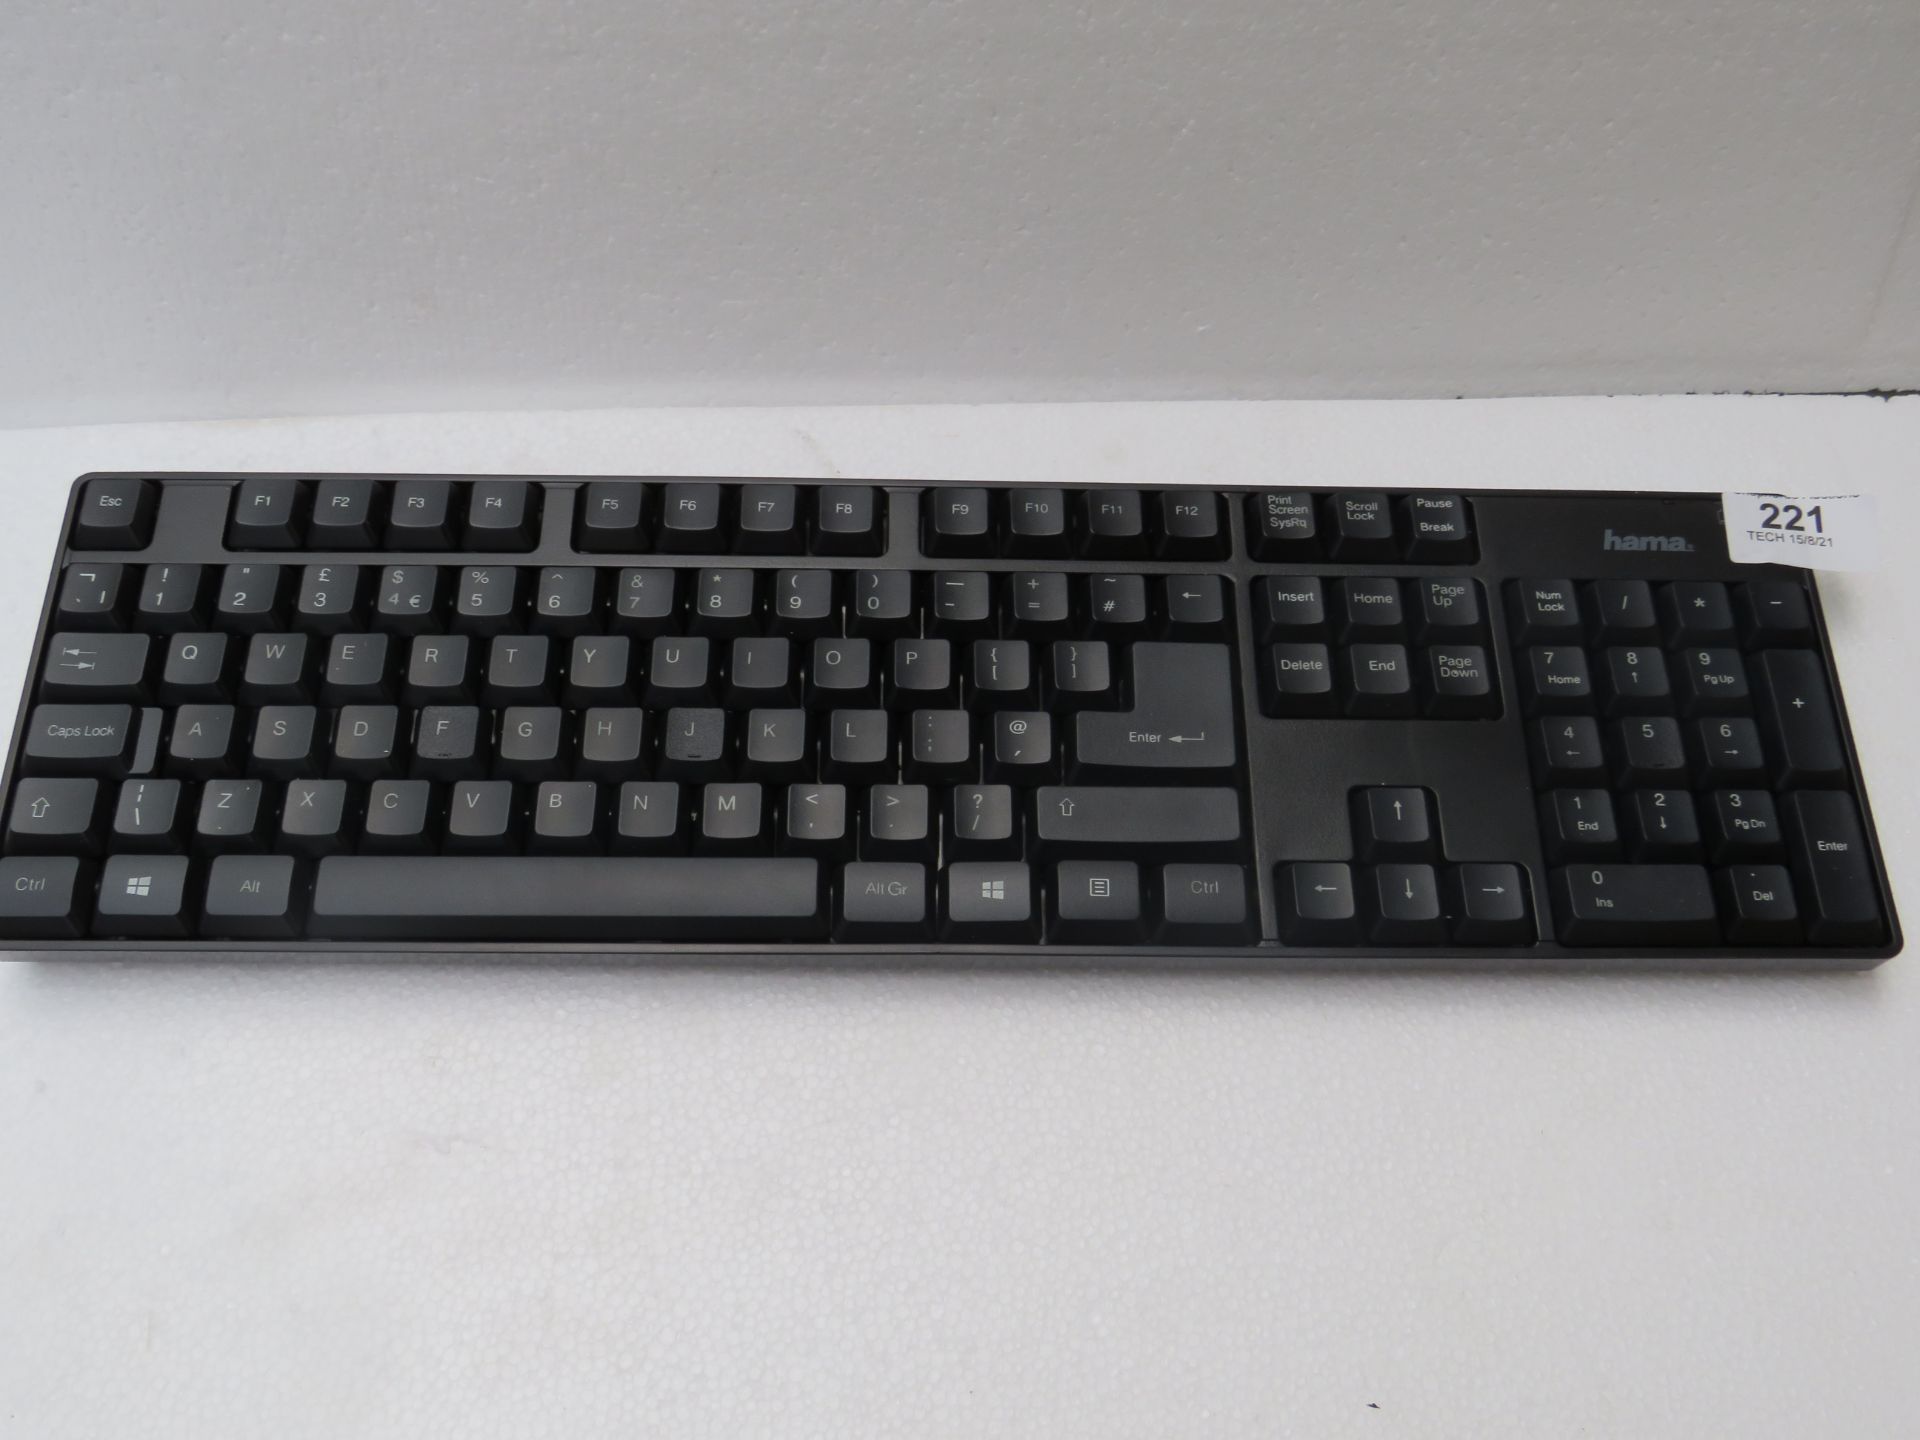 Hama RF 2200 Wireless Keyboard - Untested & Boxed - RRP £30